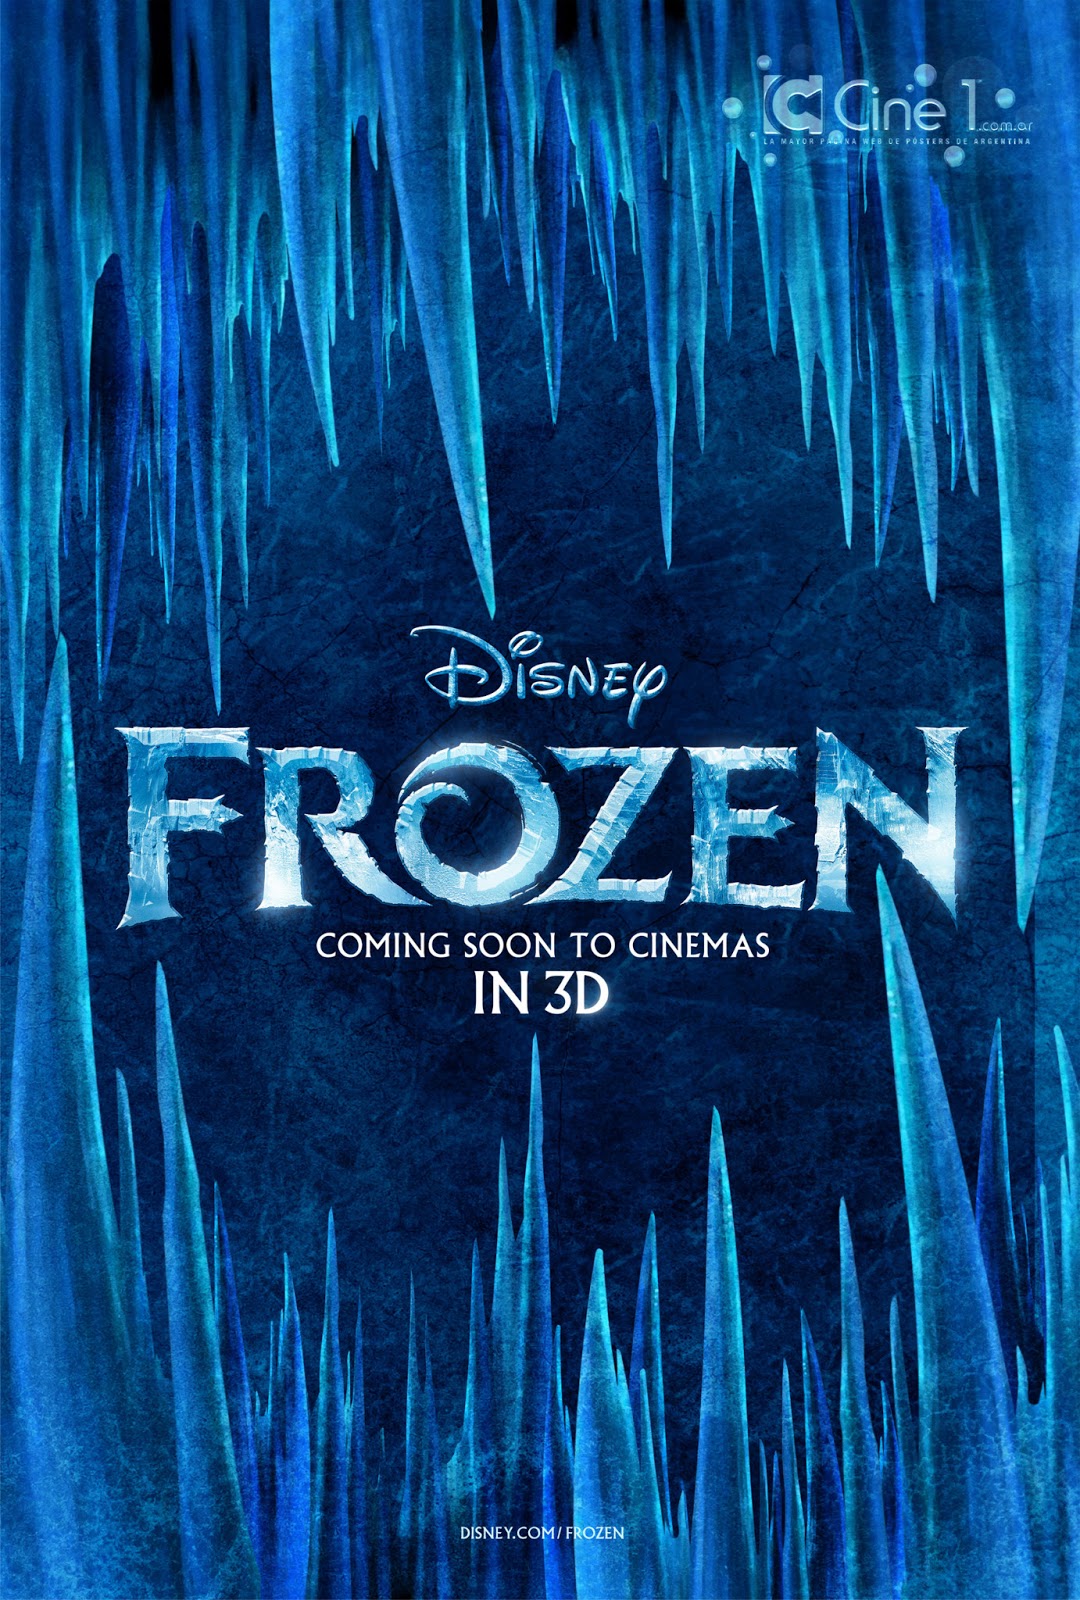 Disney Frozen Frozen Poster - Frozen 2 Wallpaper Iphone - HD Wallpaper 